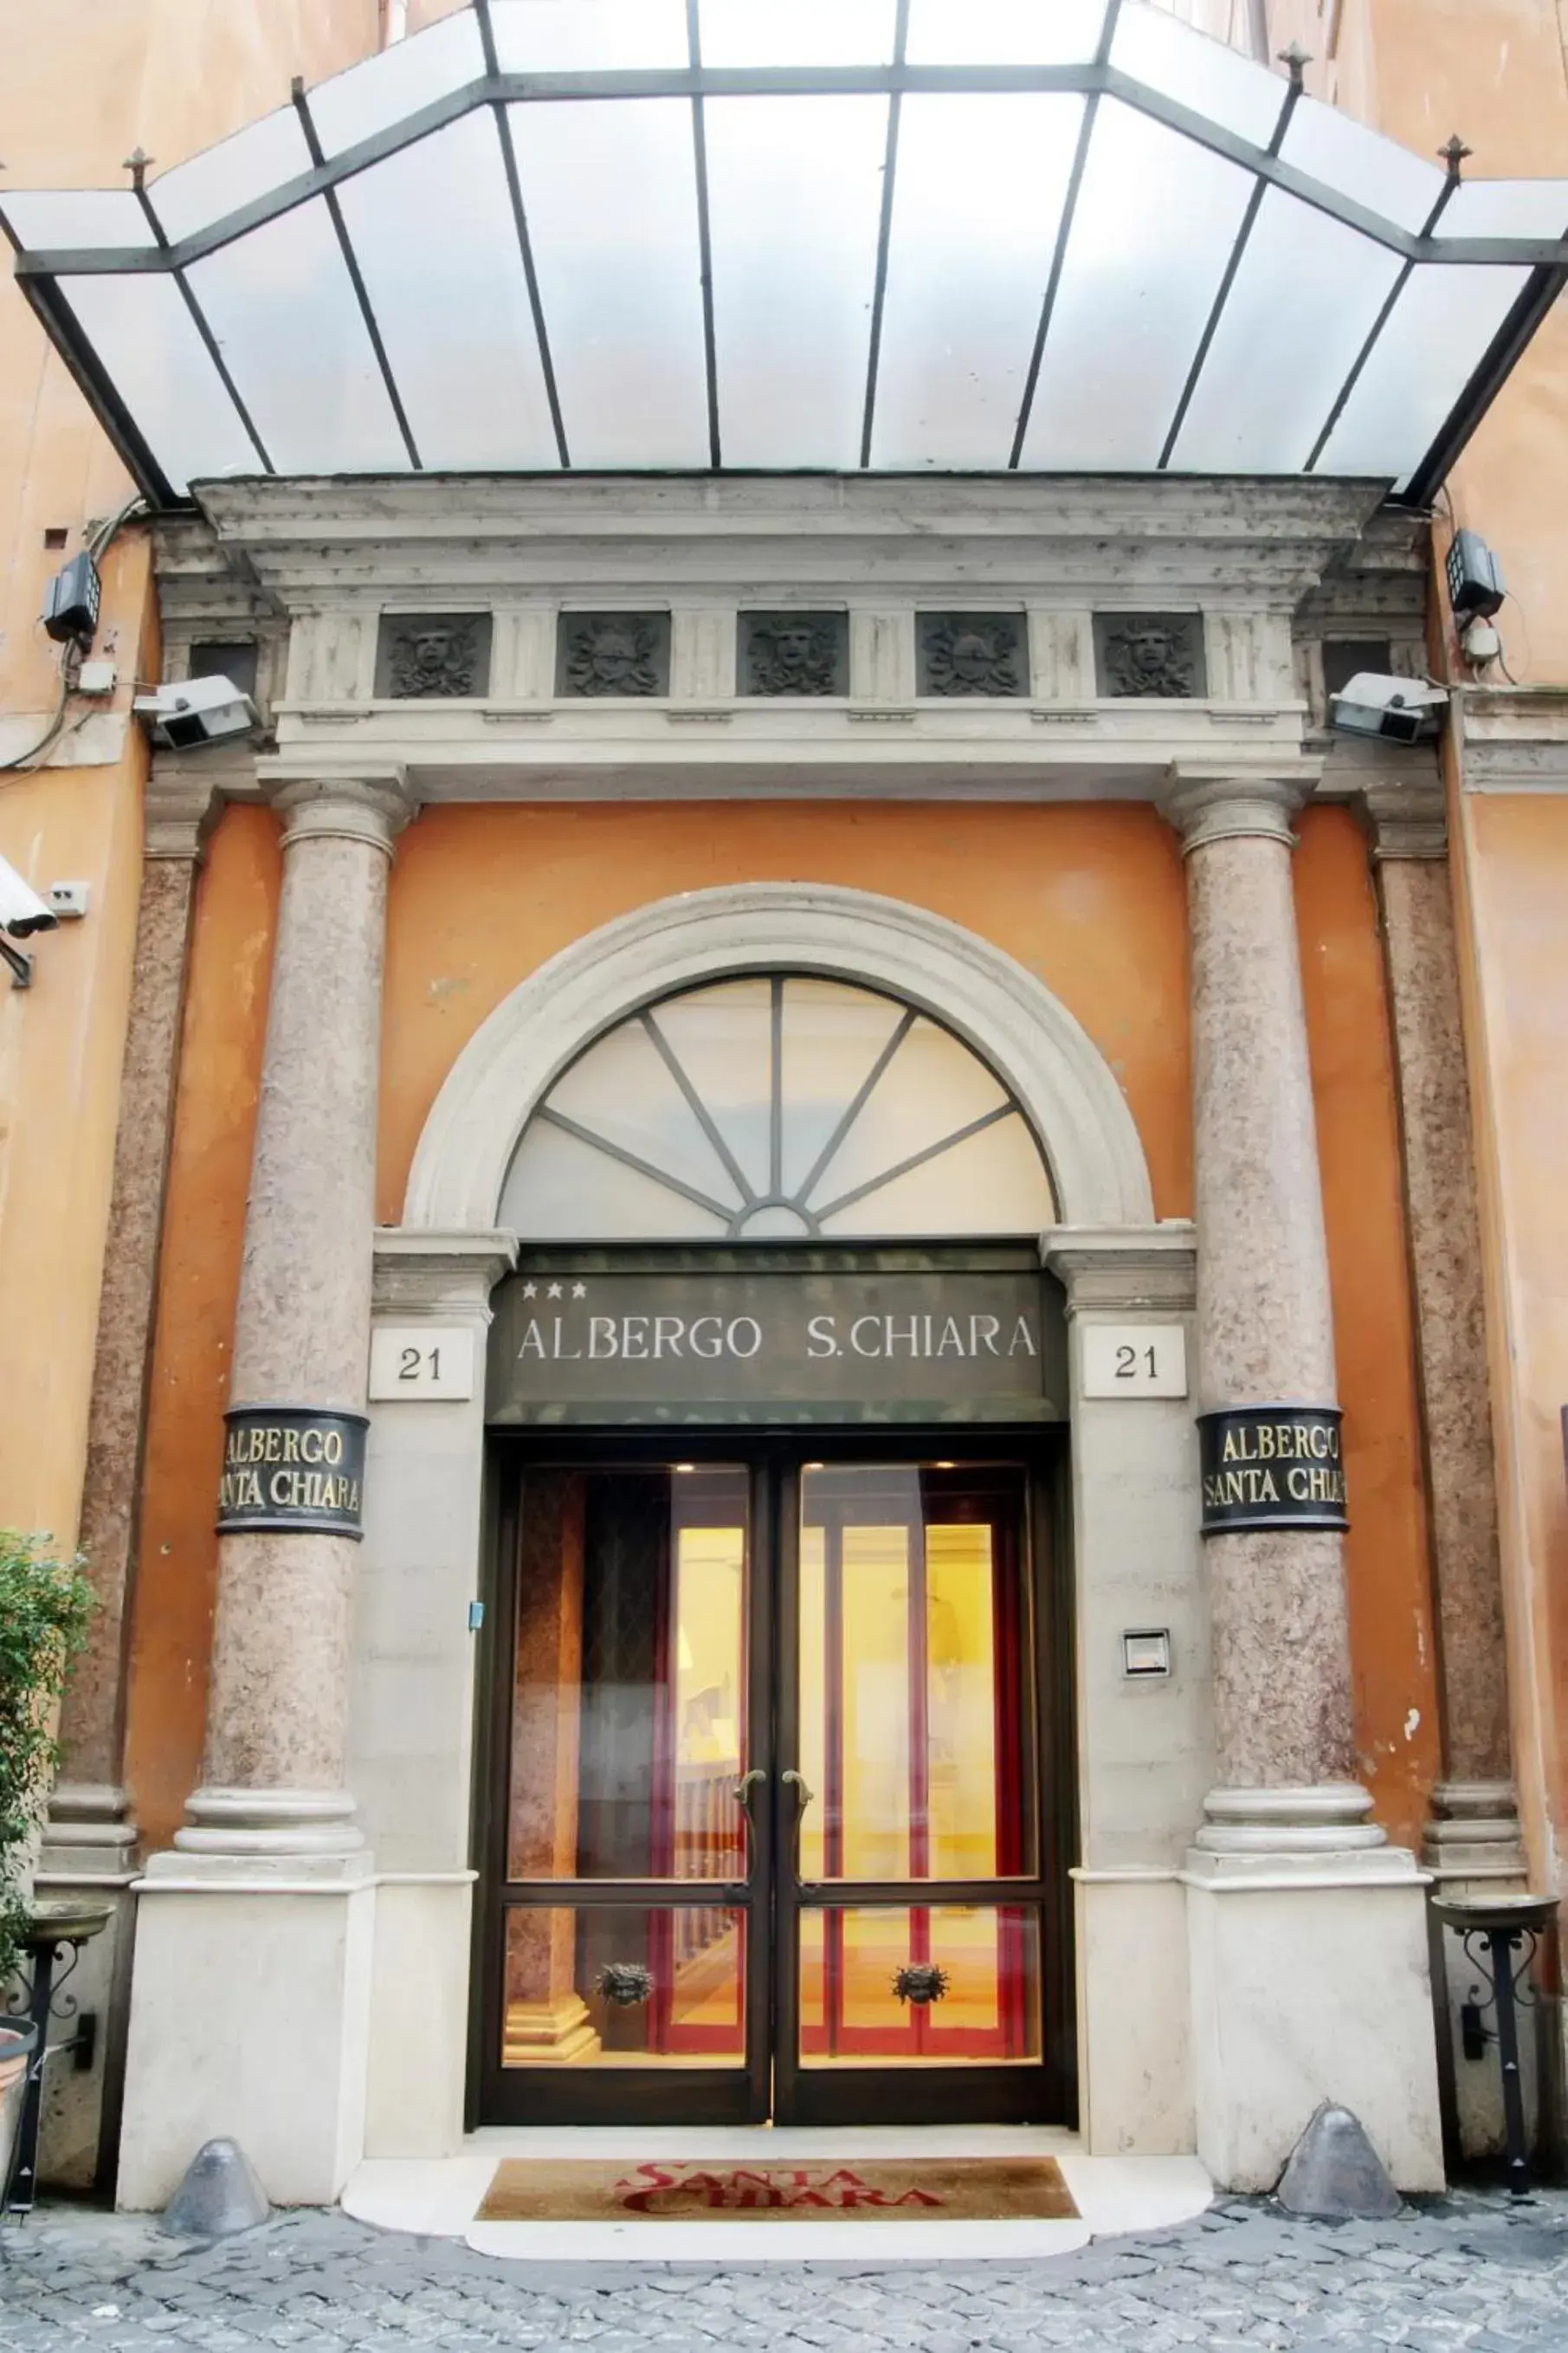 Facade/entrance in Hotel Albergo Santa Chiara